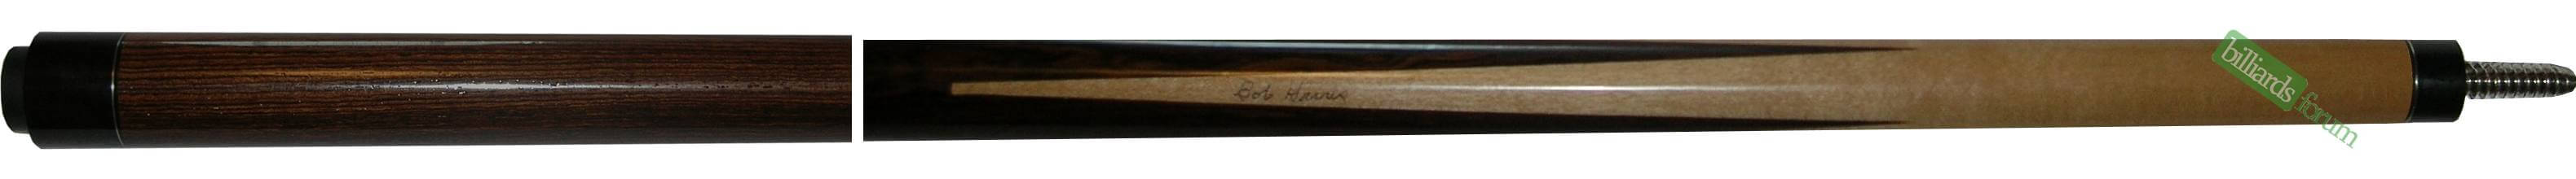 2007 Bob Harris Custom Bacote 